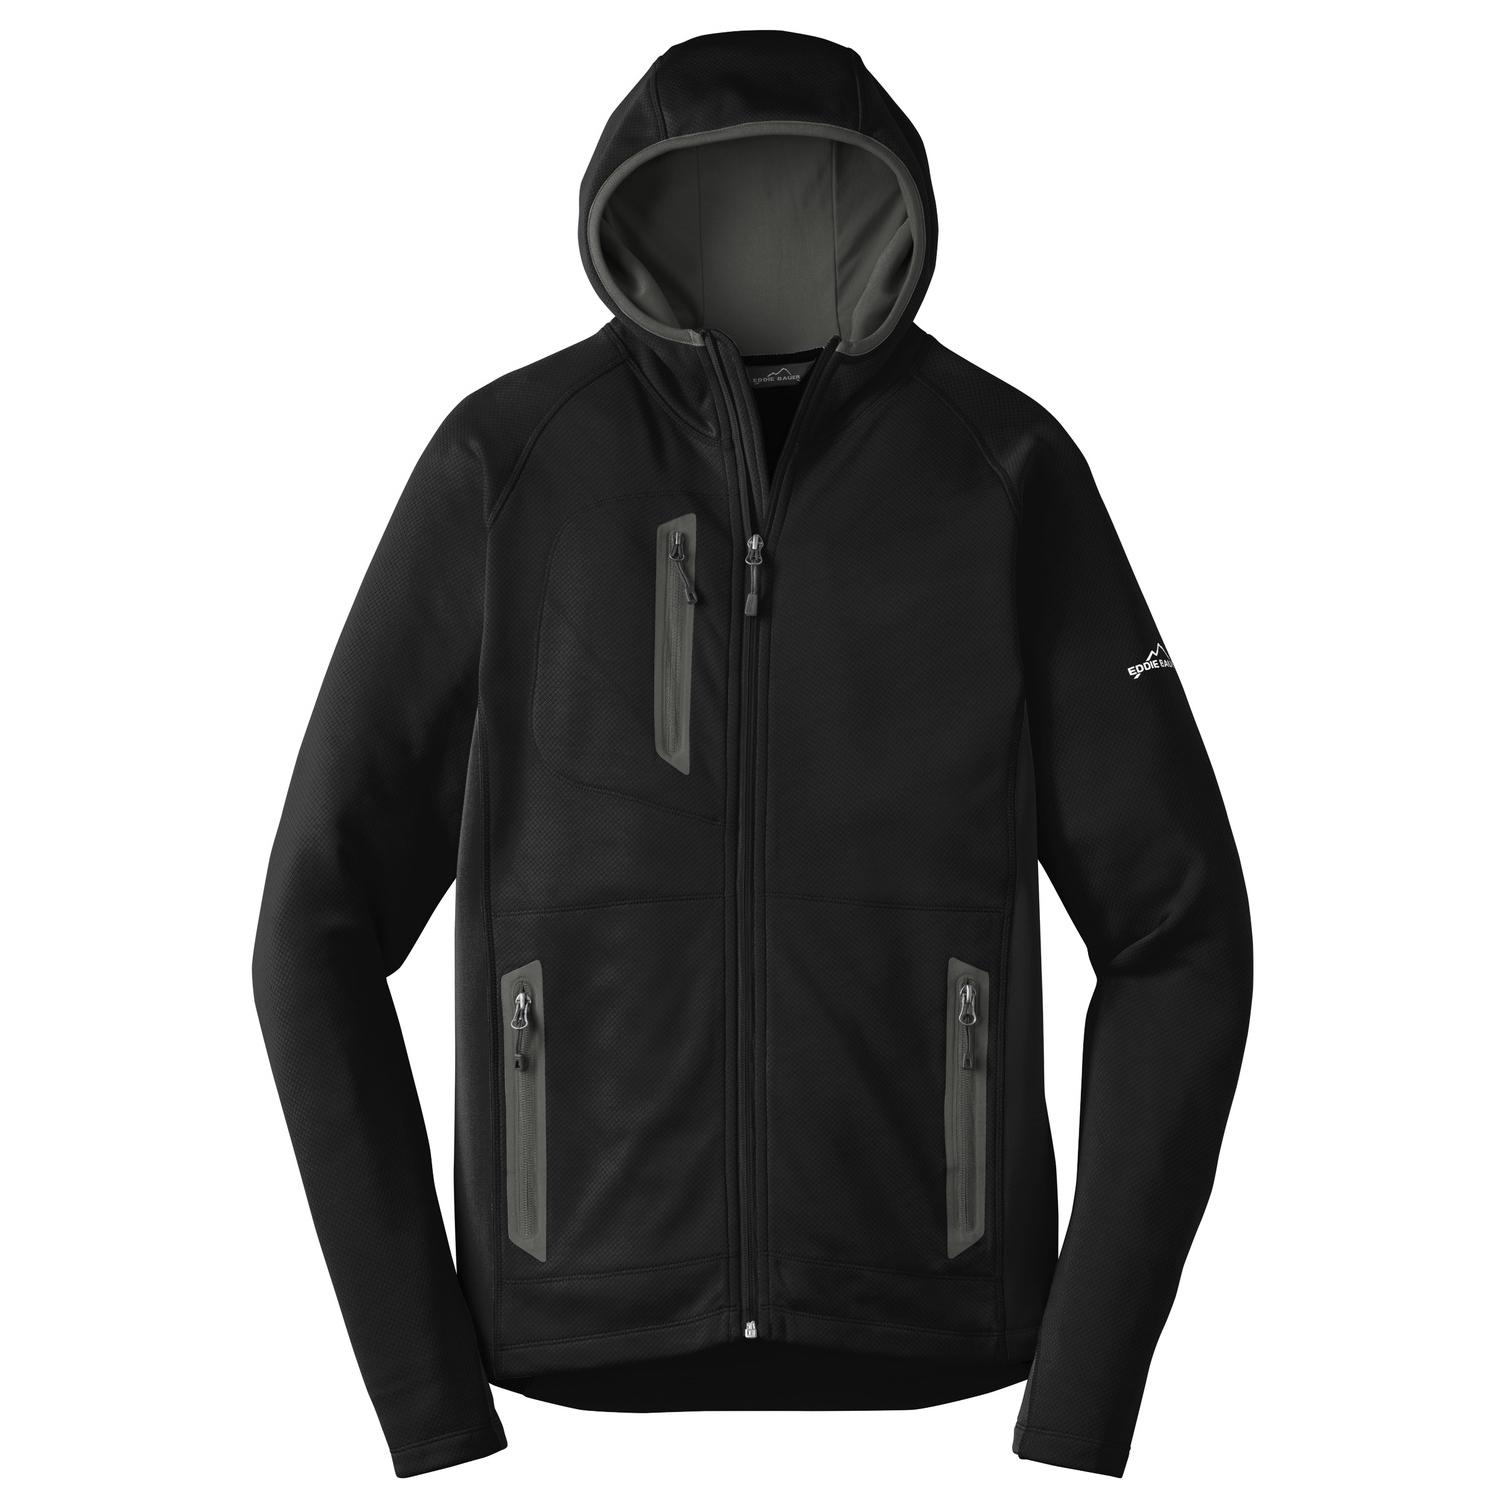 Eddie Bauer [EB244] Sport Hooded Full-Zip Fleece Jacket